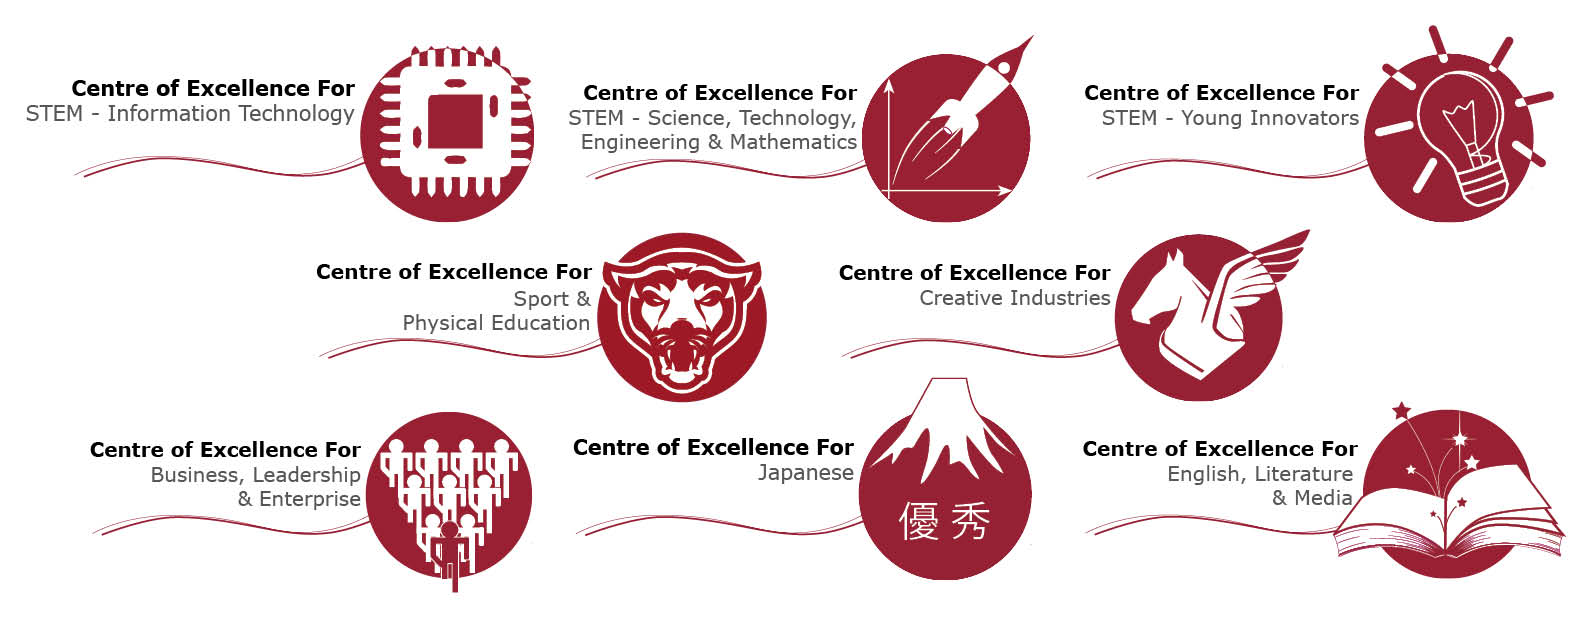 Centre of Excellence Logos.jpg